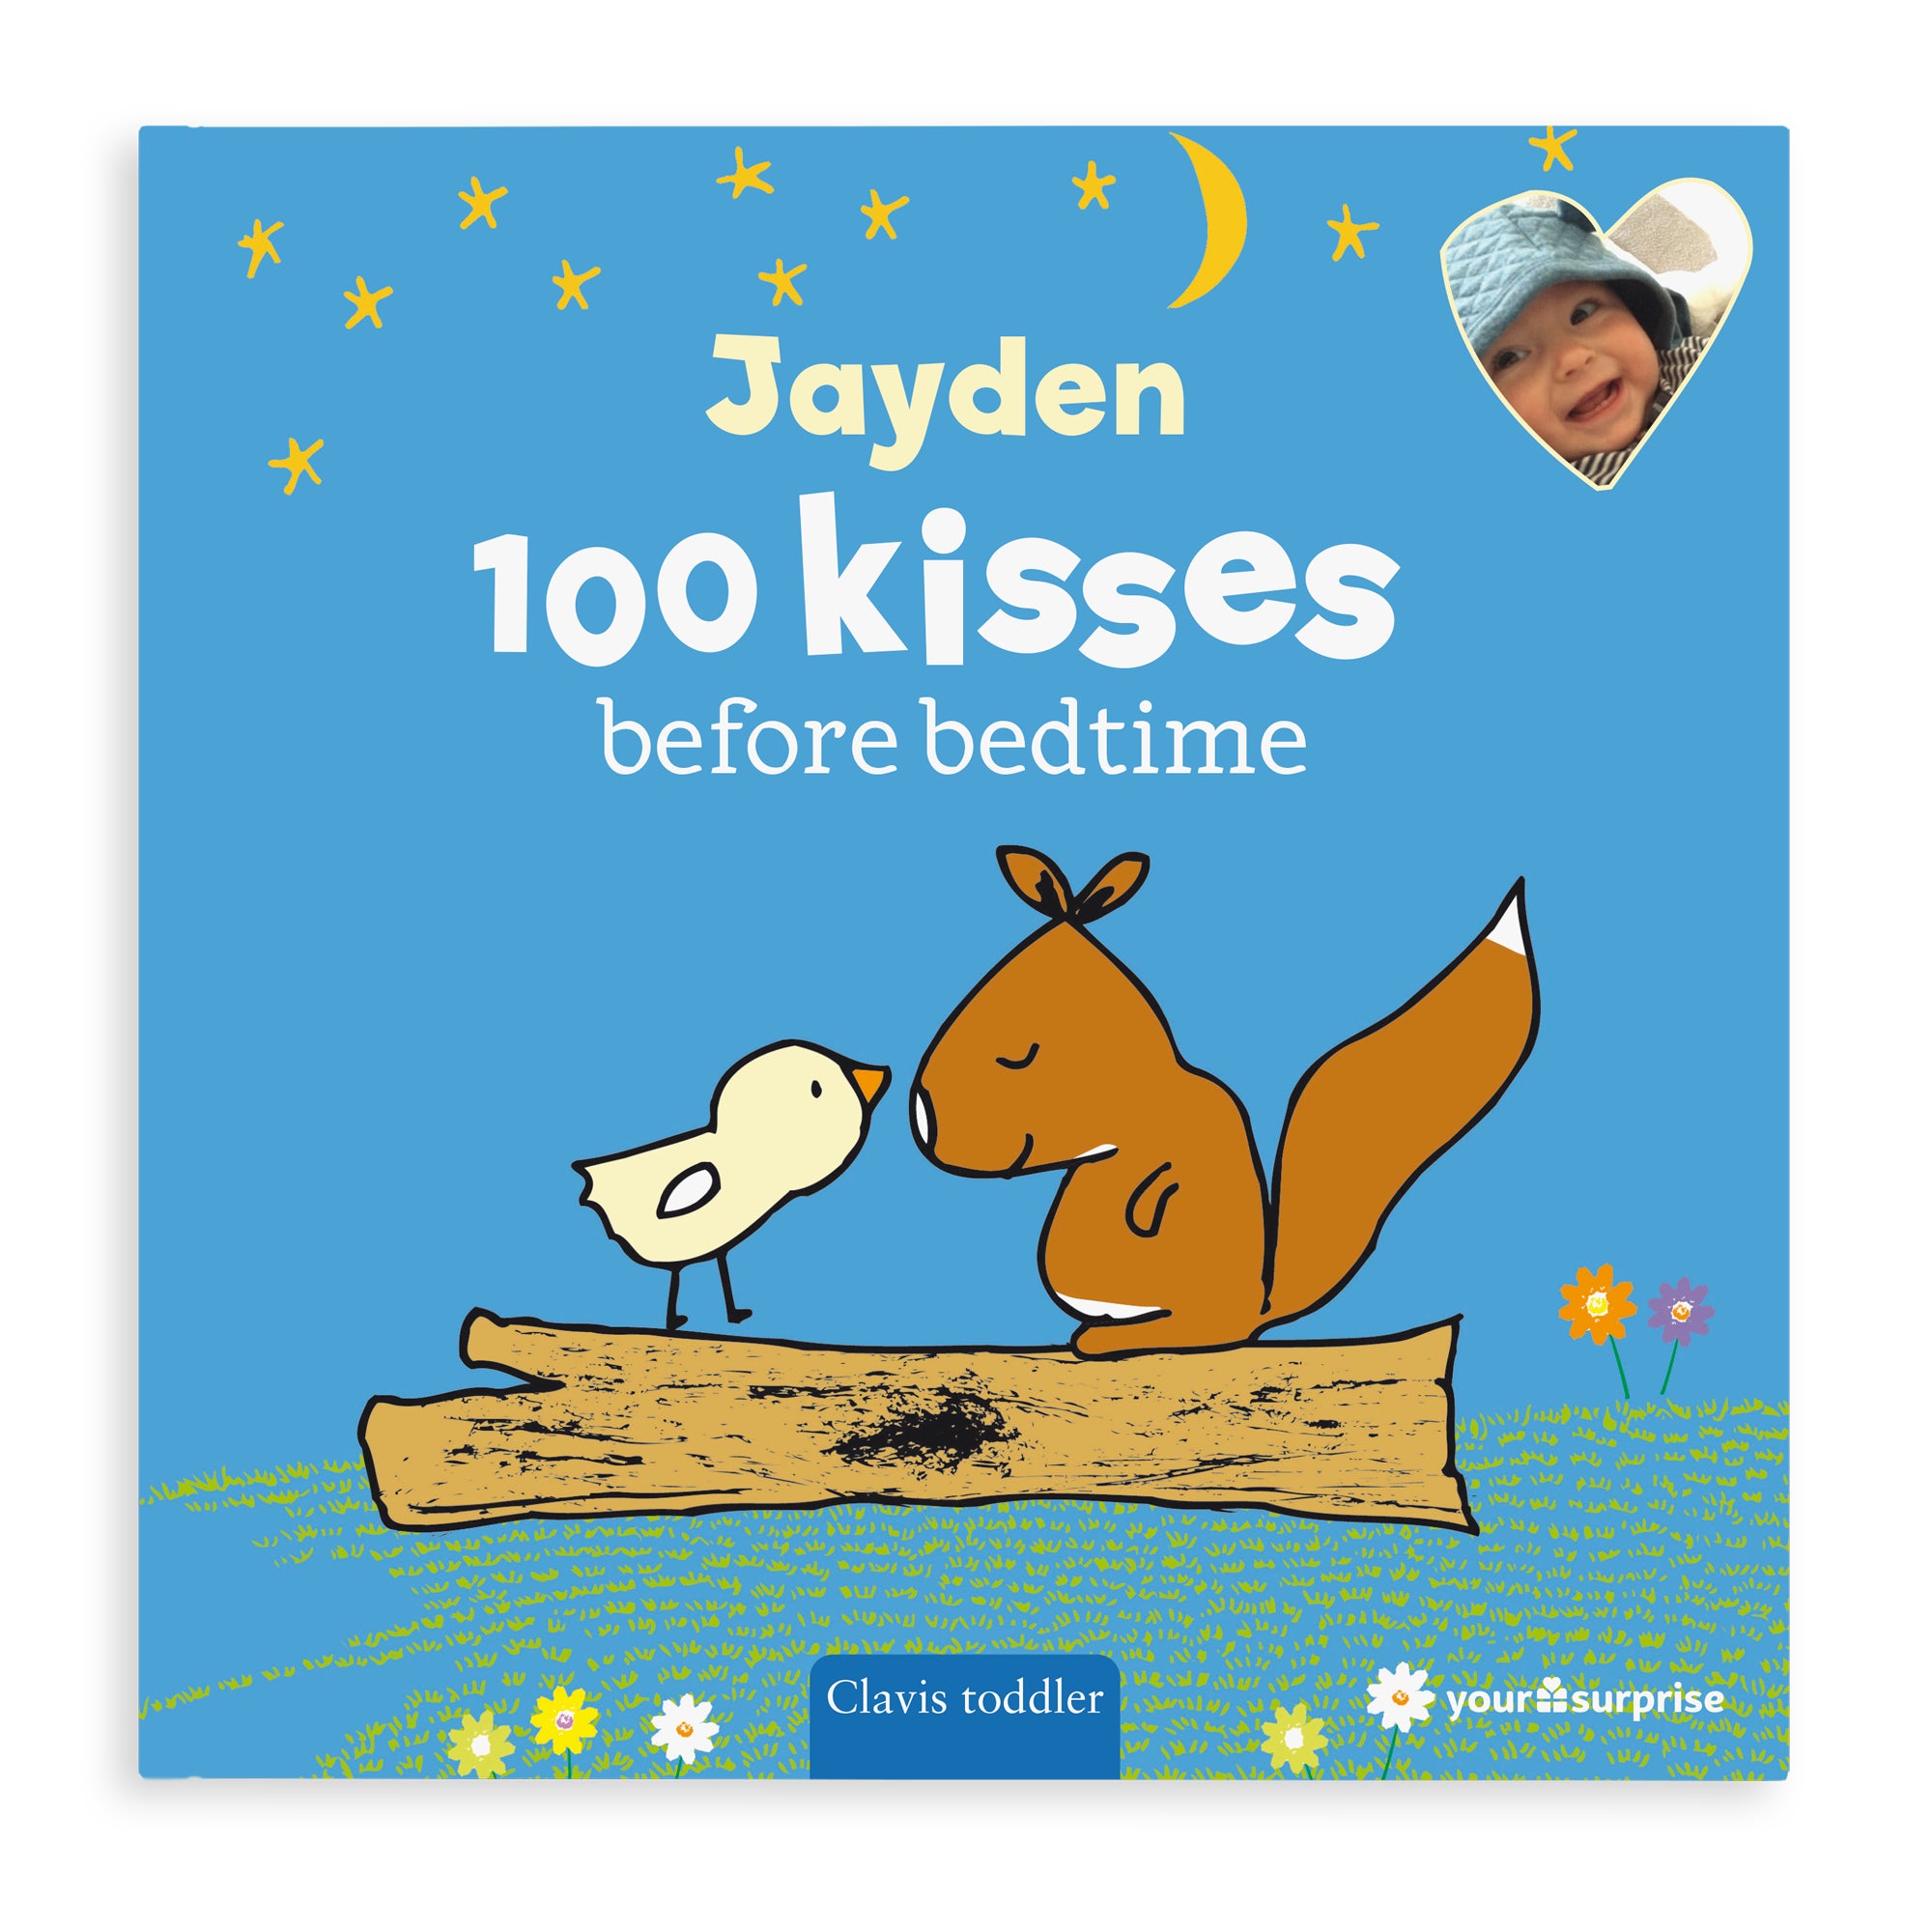 Personalised children's book - 100 kisses before bedtime - Hardcover